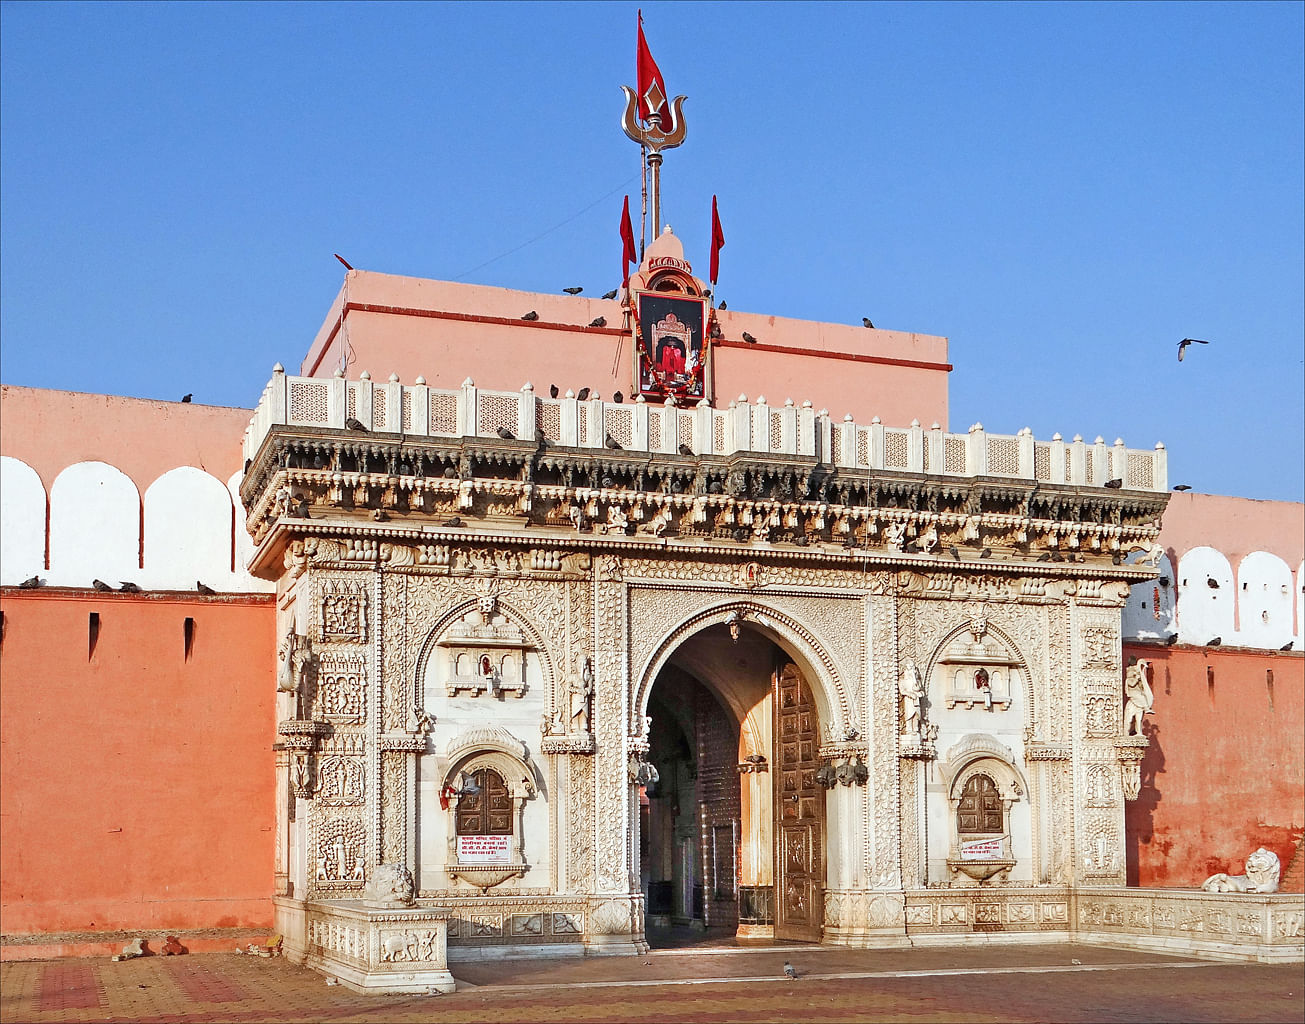 Temple of Karni Mata